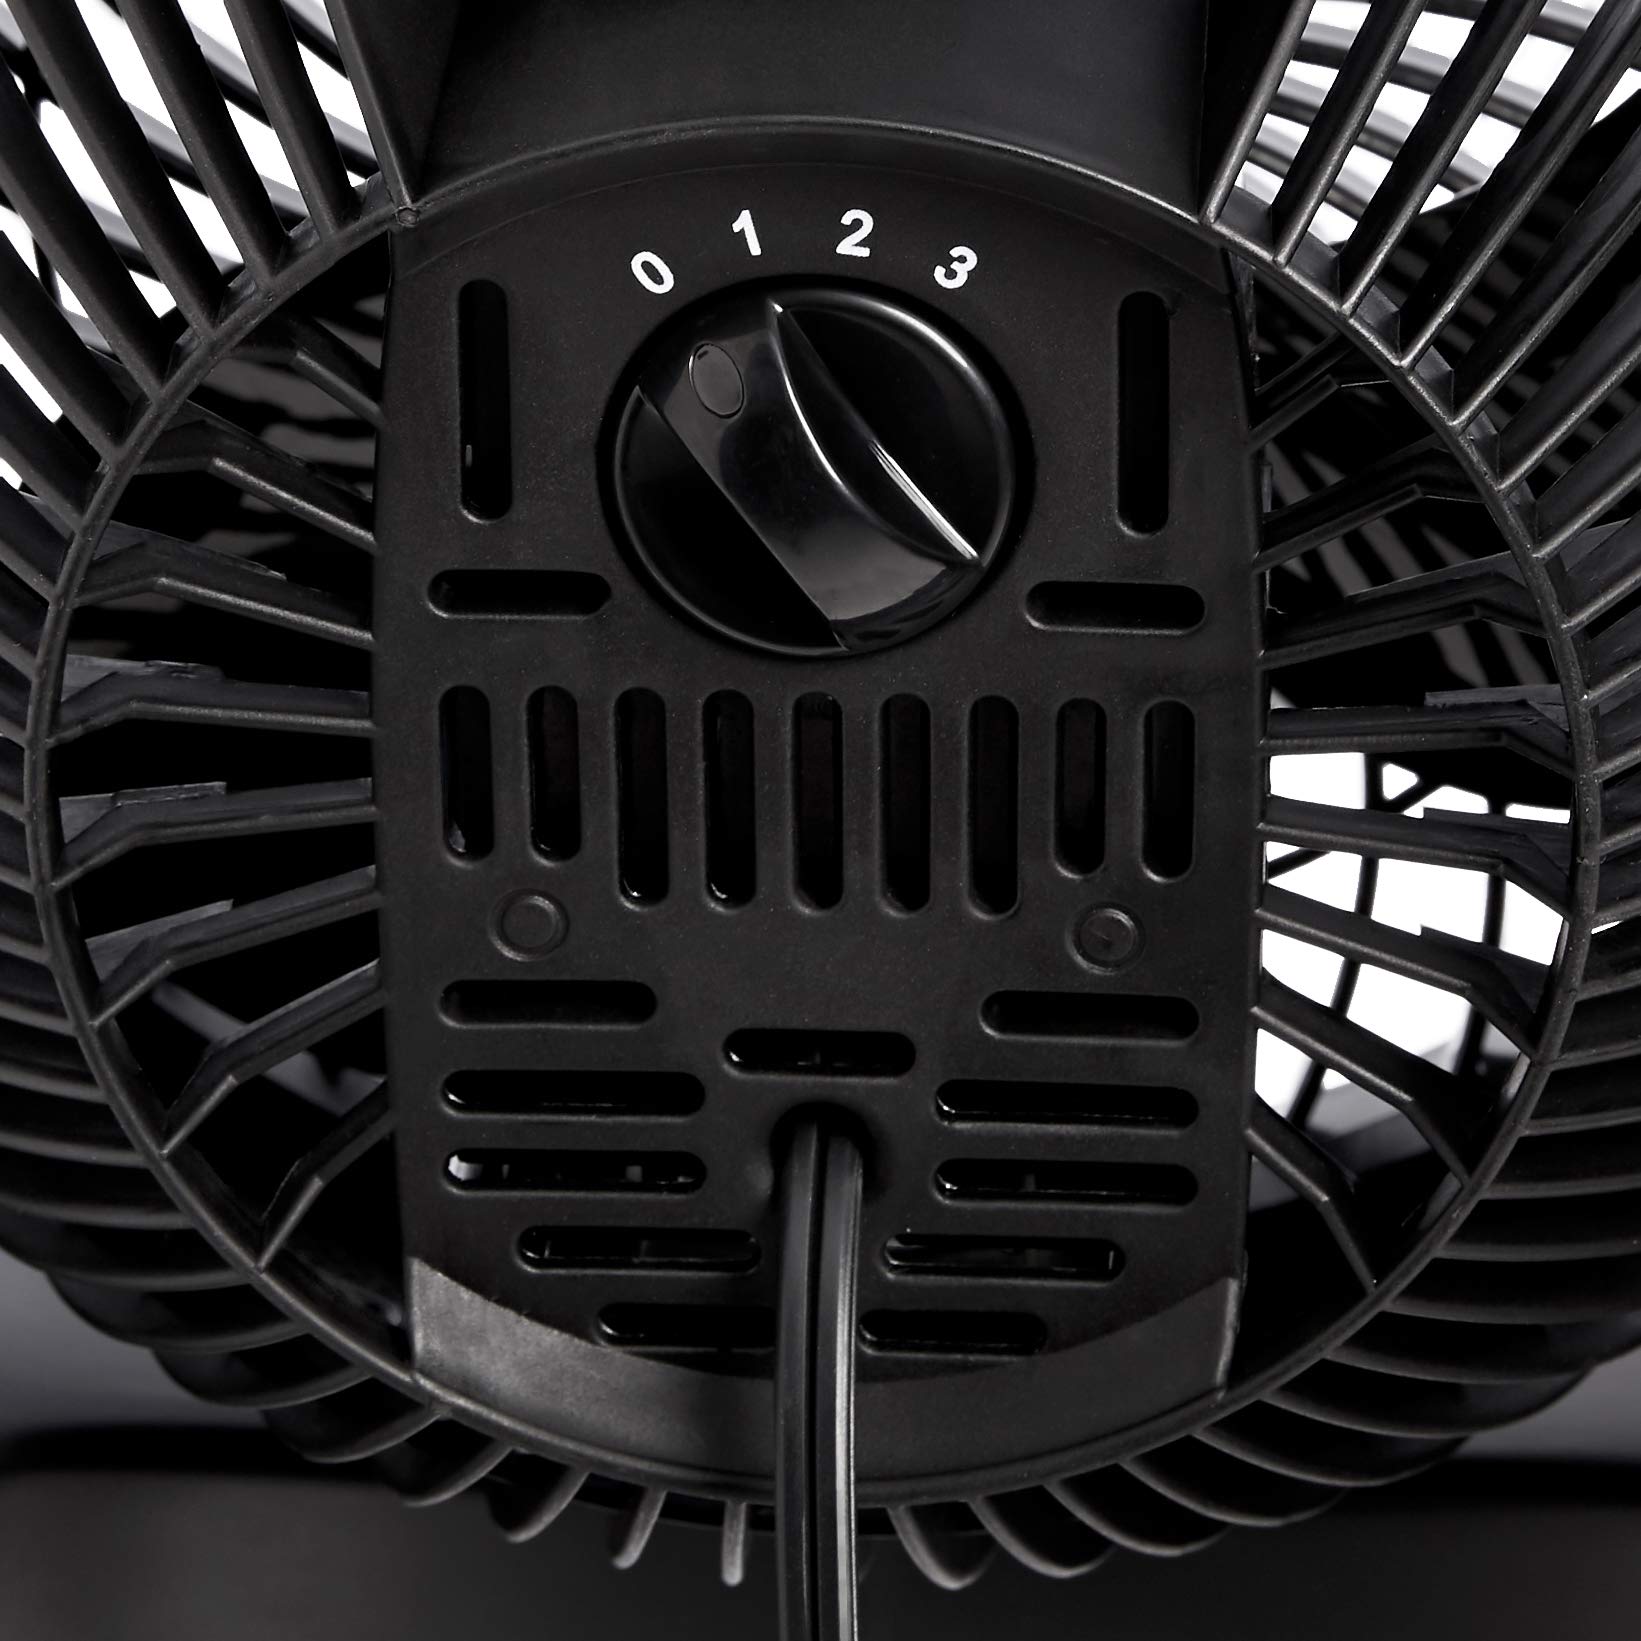 Amazon Basics 3 Speed Small Room Air Circulator Fan, 7-Inch Blade, Black, 6.3